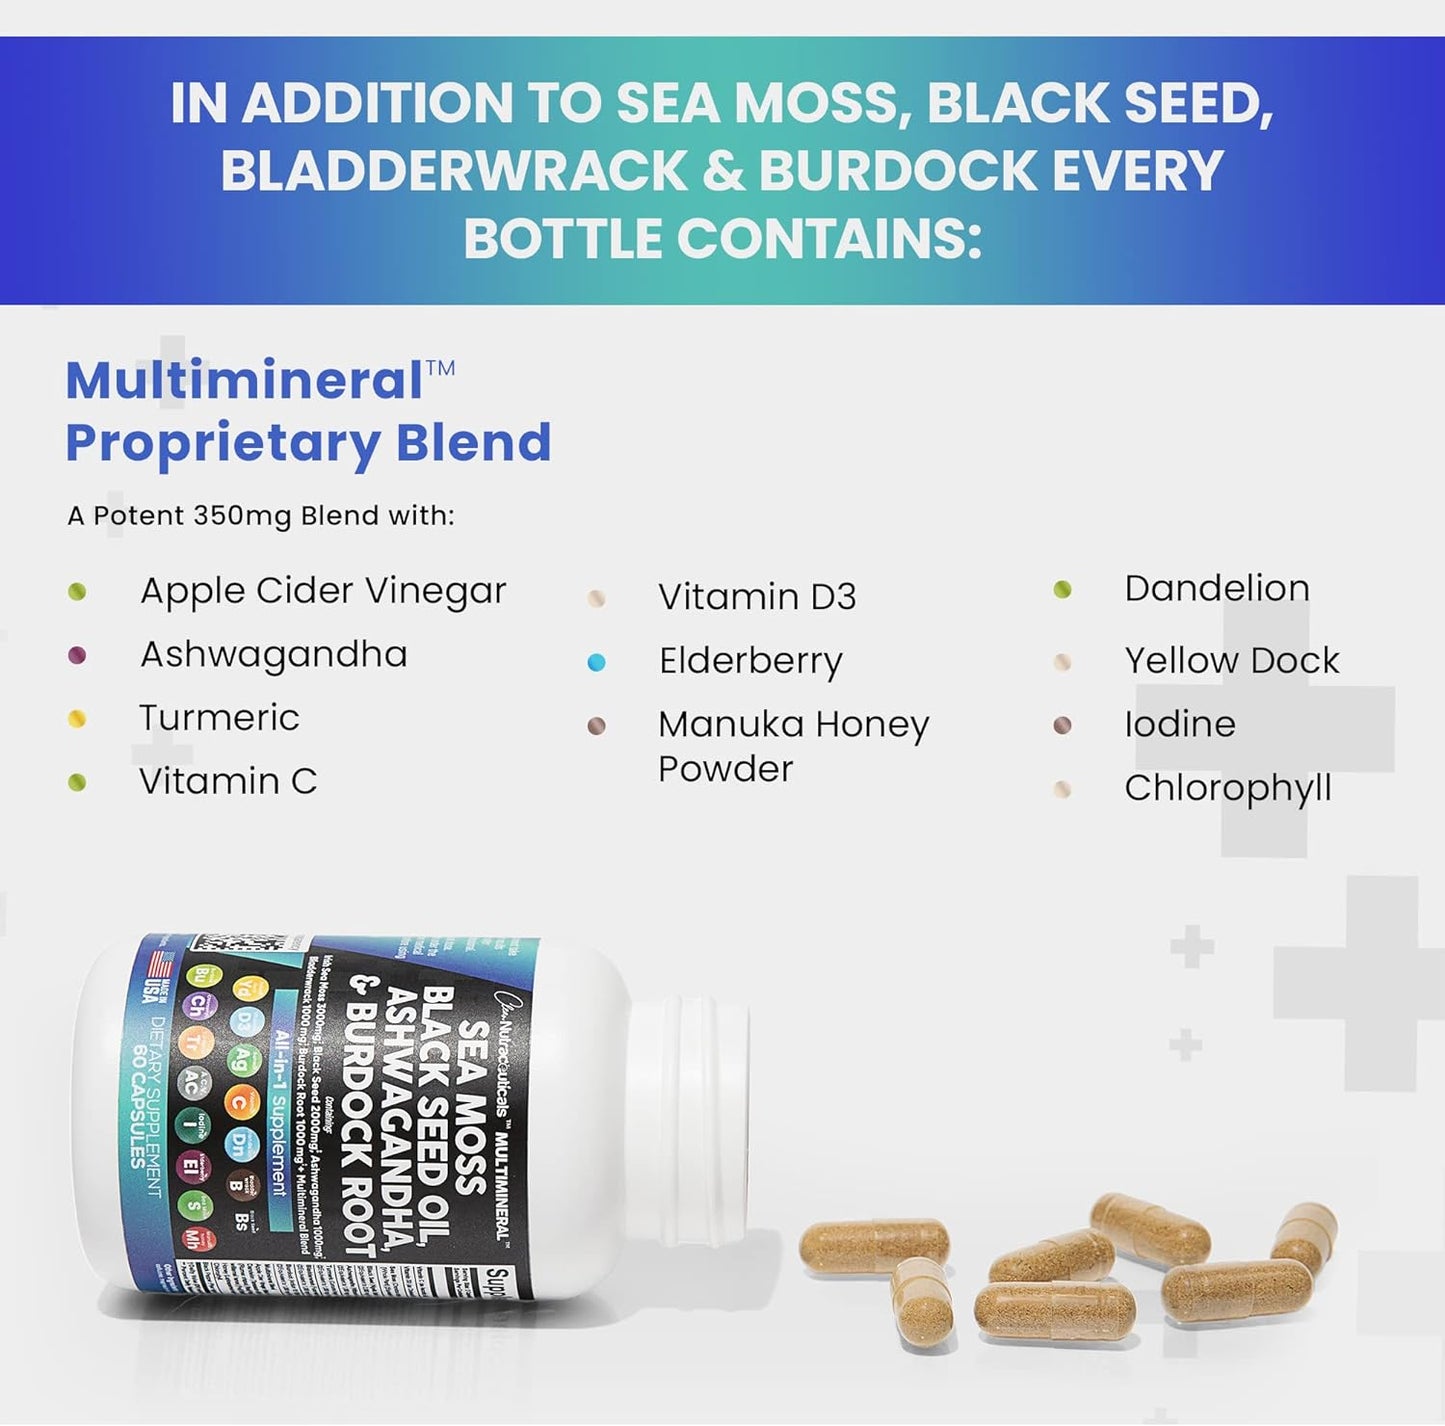 Trending Ultimate Immune Boost: Sea Moss 3000mg, Black Seed Oil 2000mg, Ashwagandha 1000mg, Turmeric 1000mg, and More!